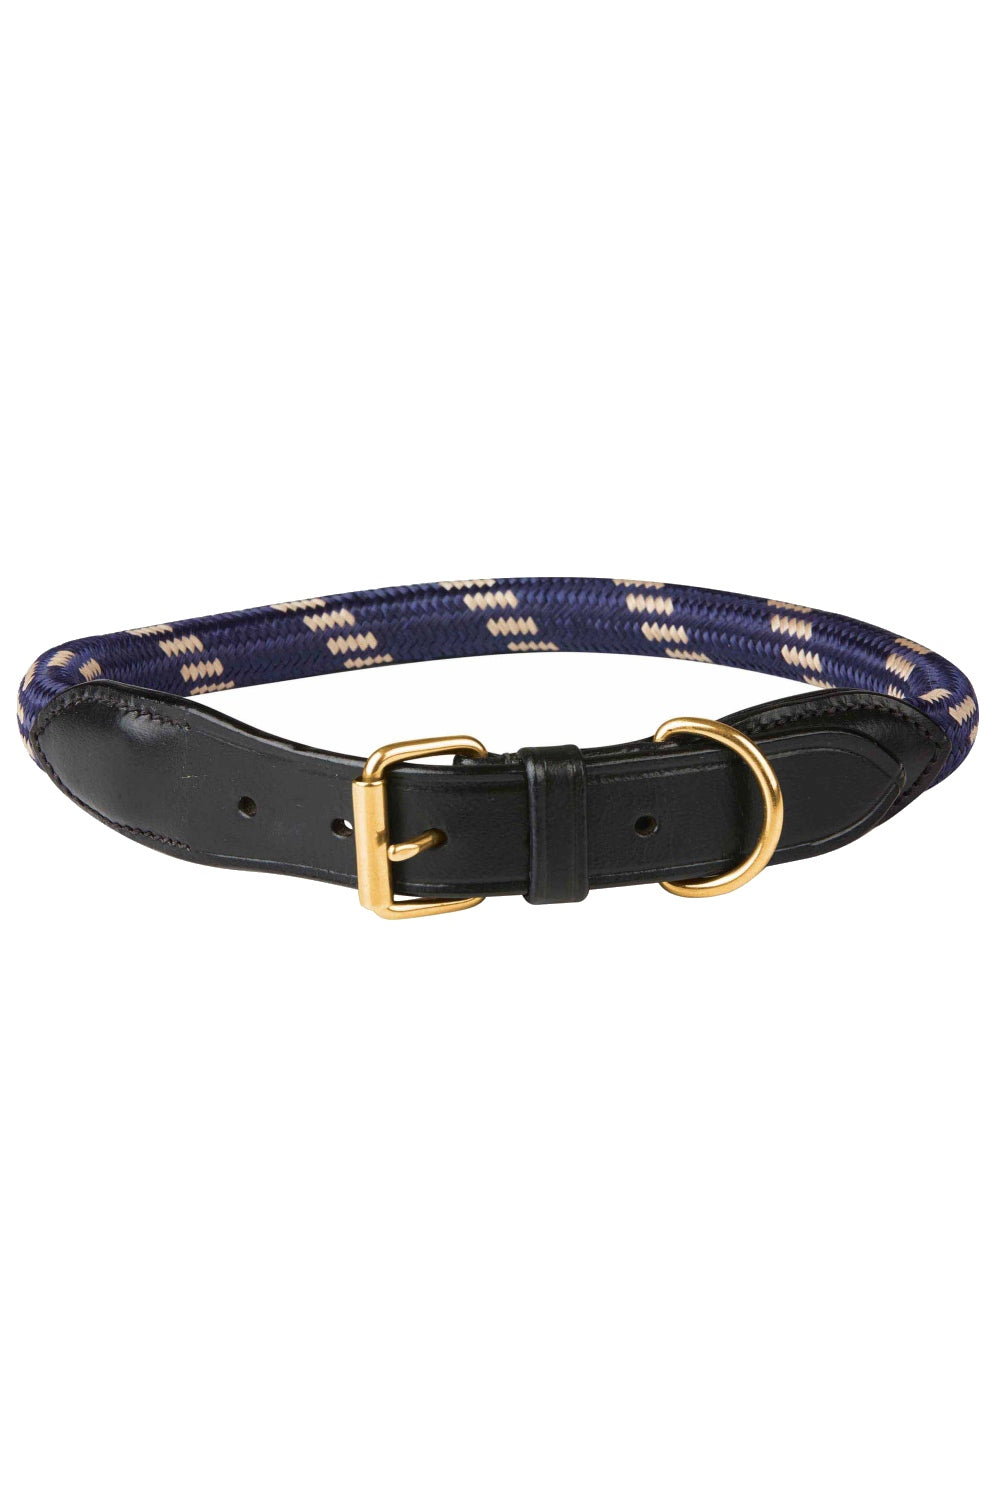 WeatherBeeta Rope Leather Dog Collar in Navy/Brown 